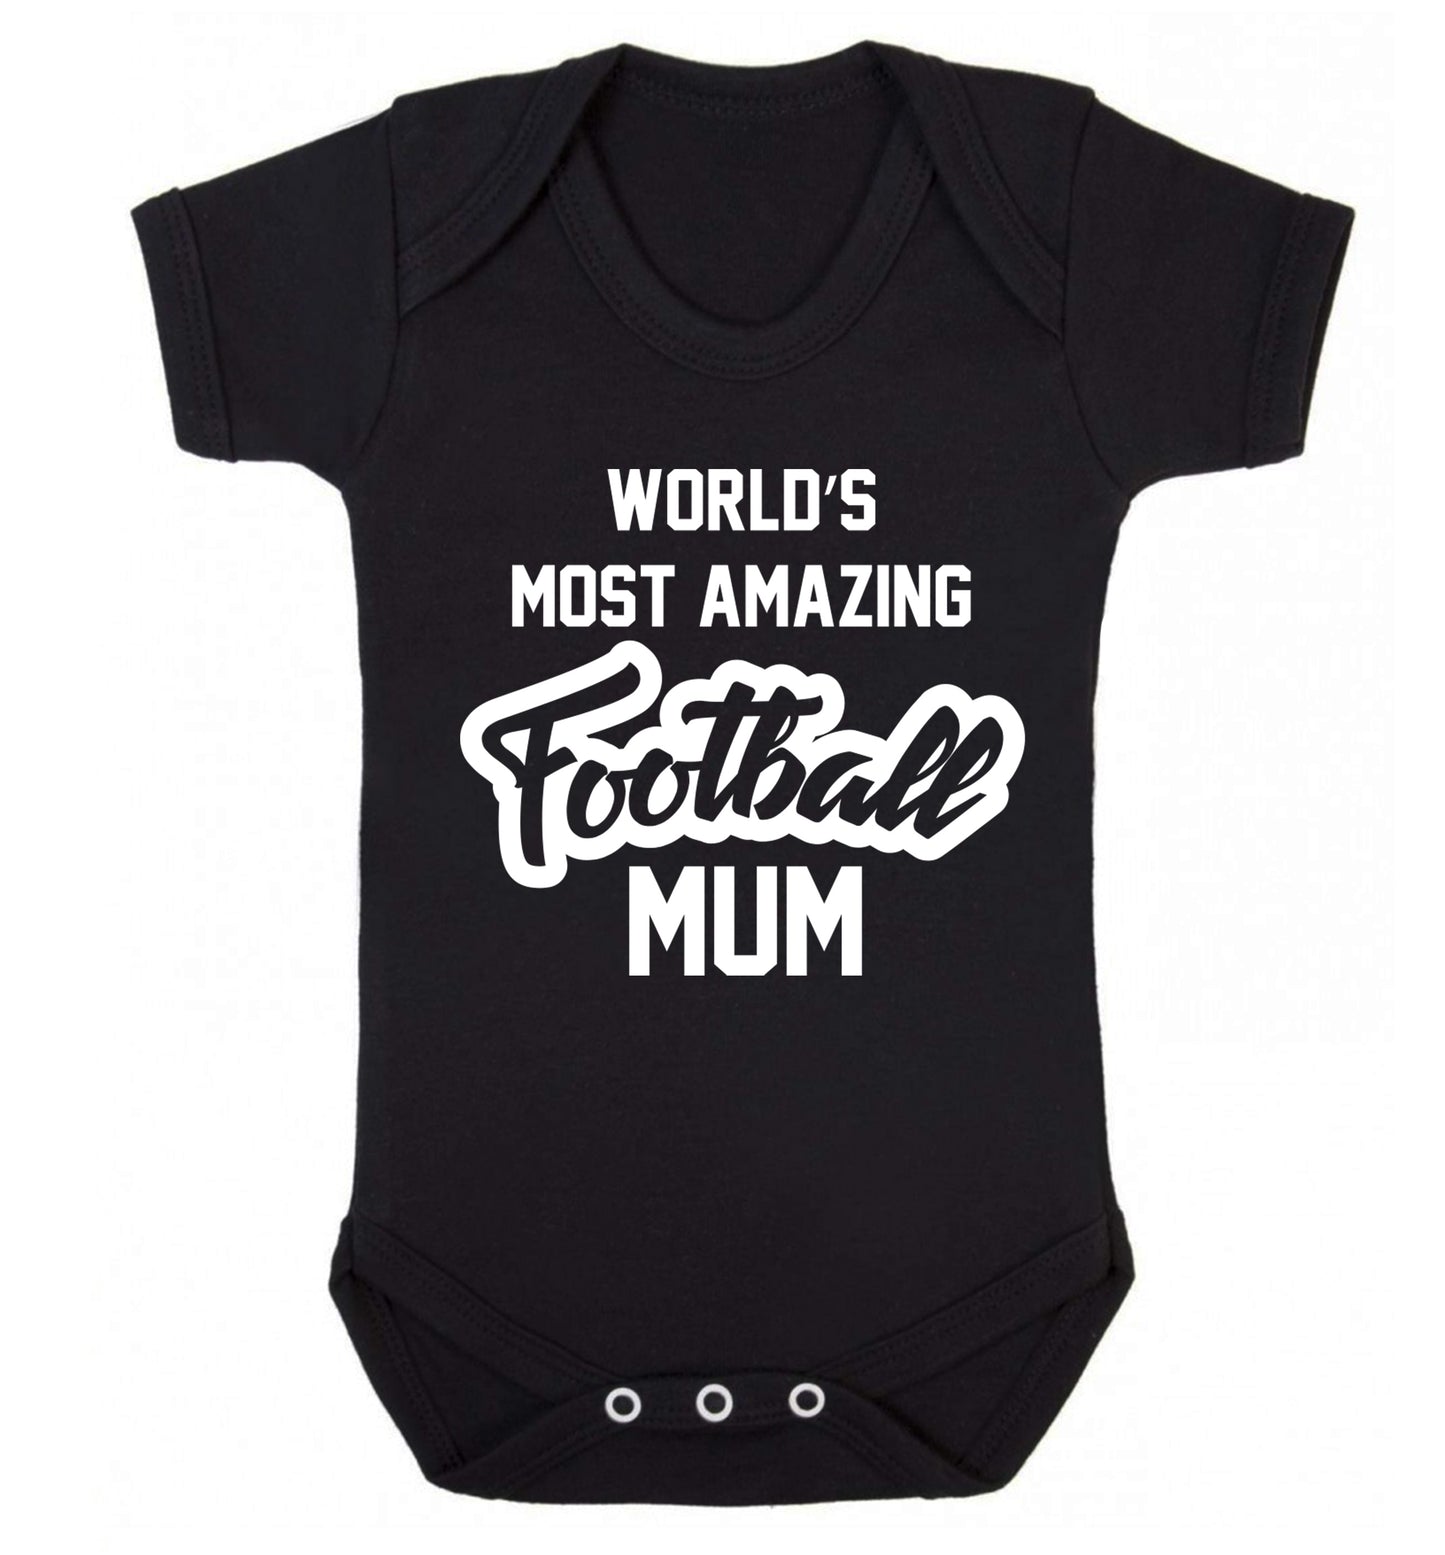 Worlds most amazing football mum Baby Vest black 18-24 months